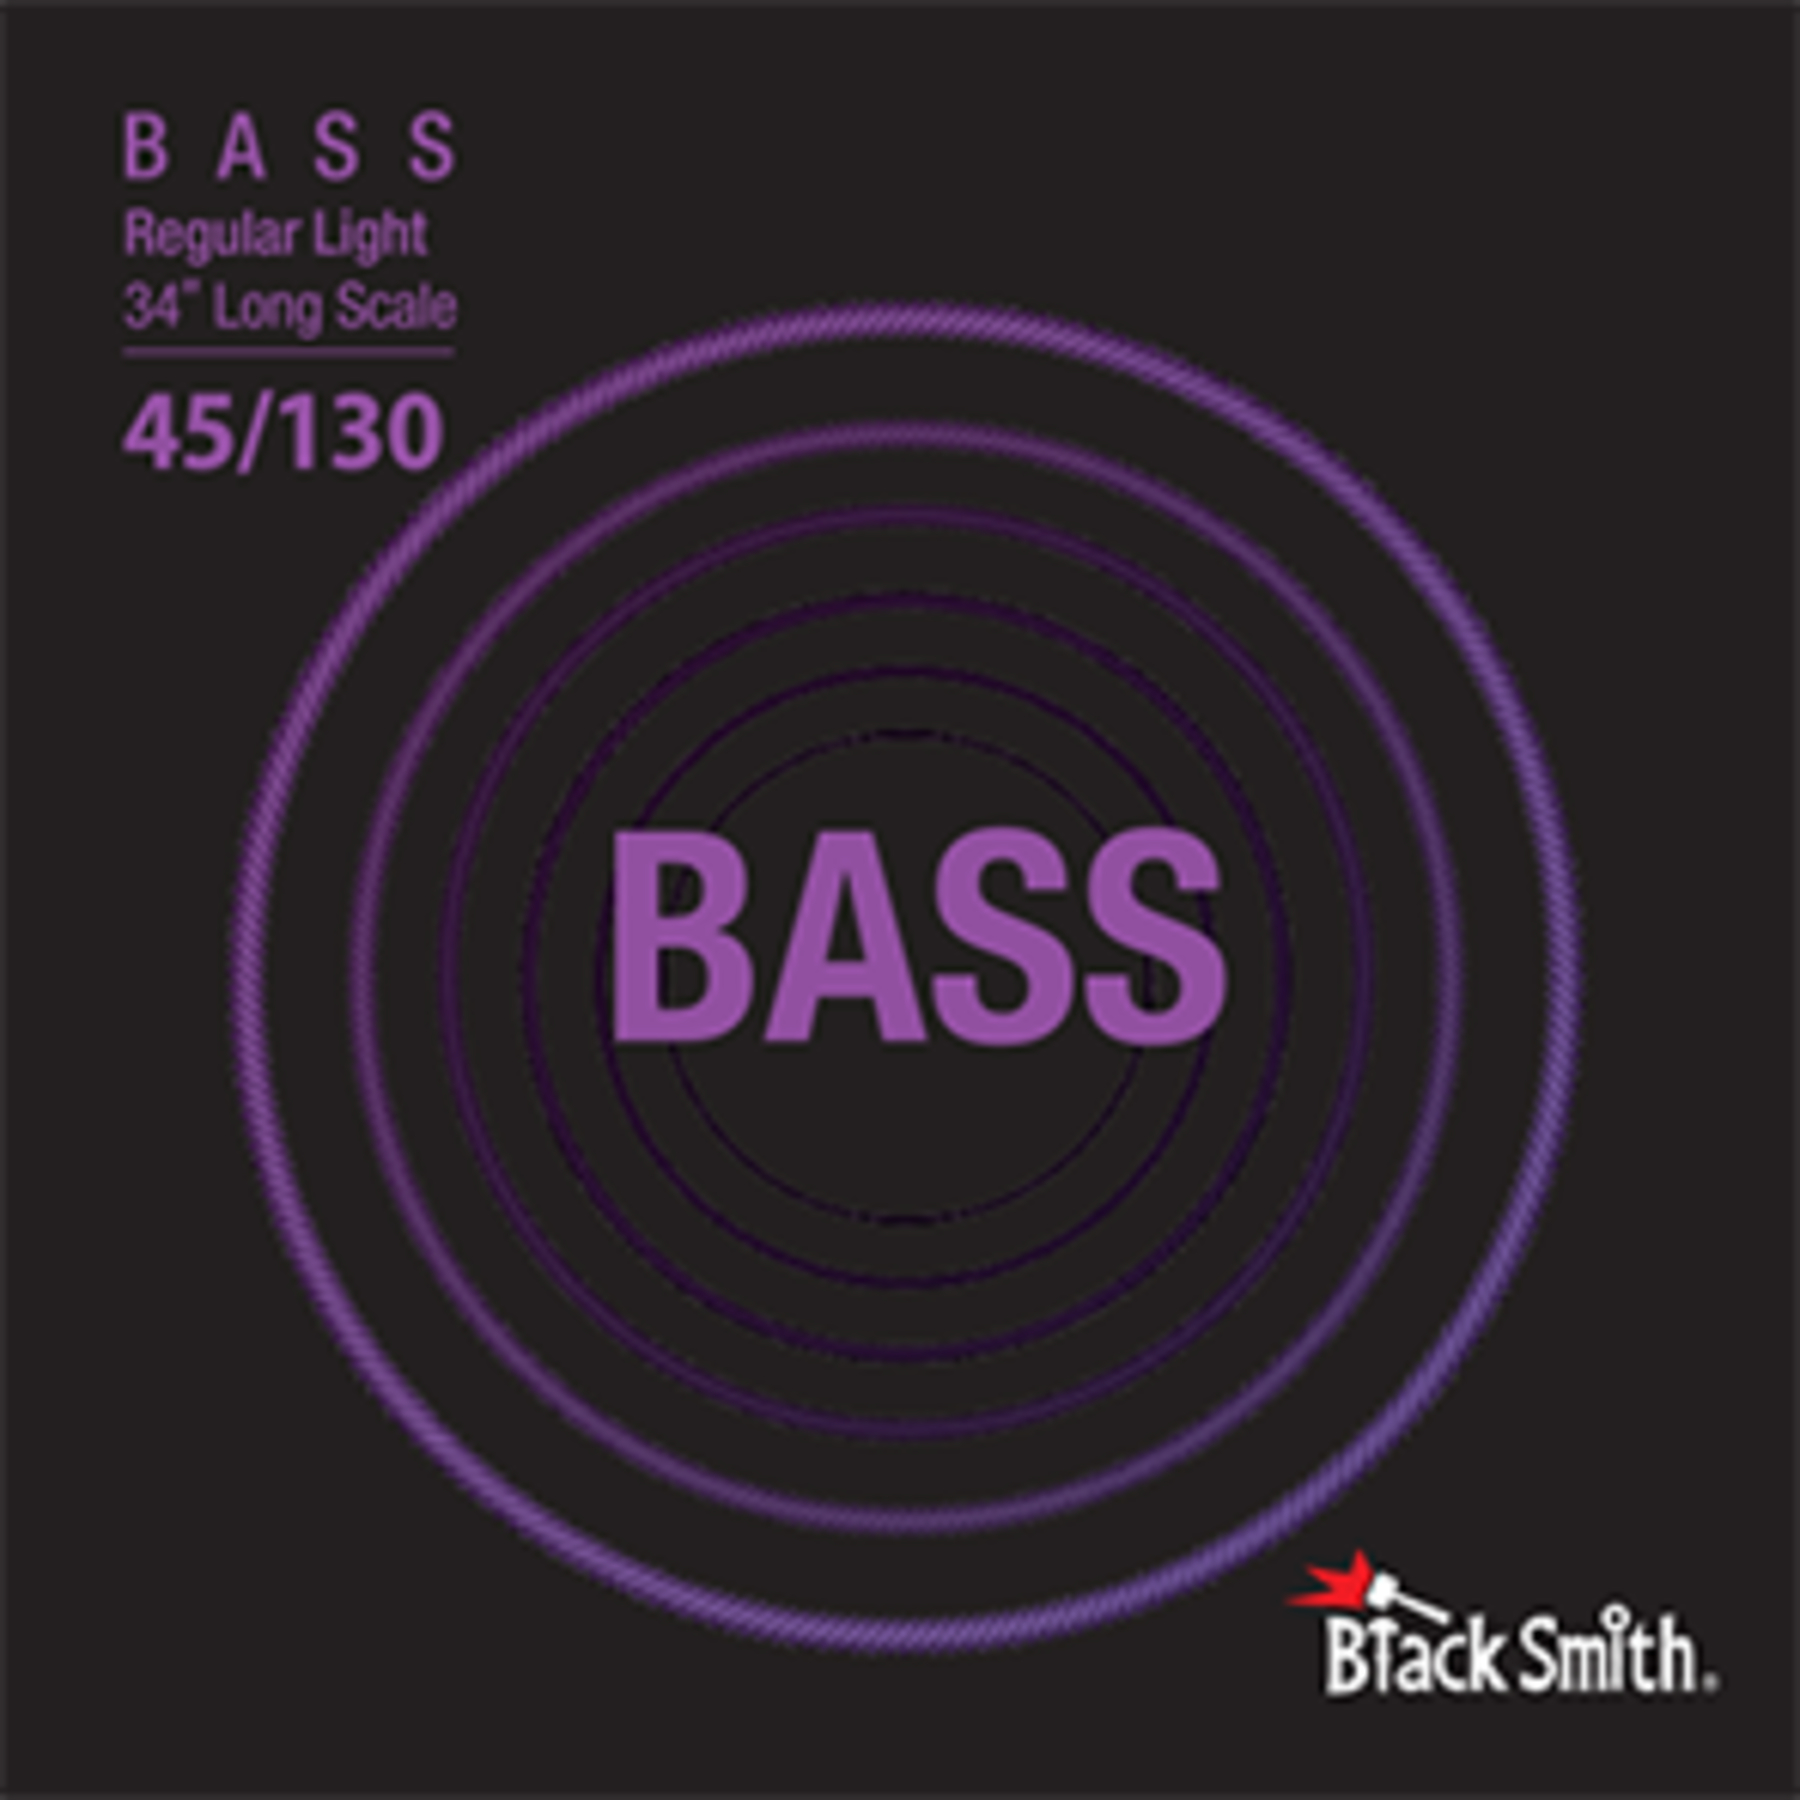 струны ernie ball 2735 slinky cobalt extra bass Струны BlackSmith Bass Regular Light 34